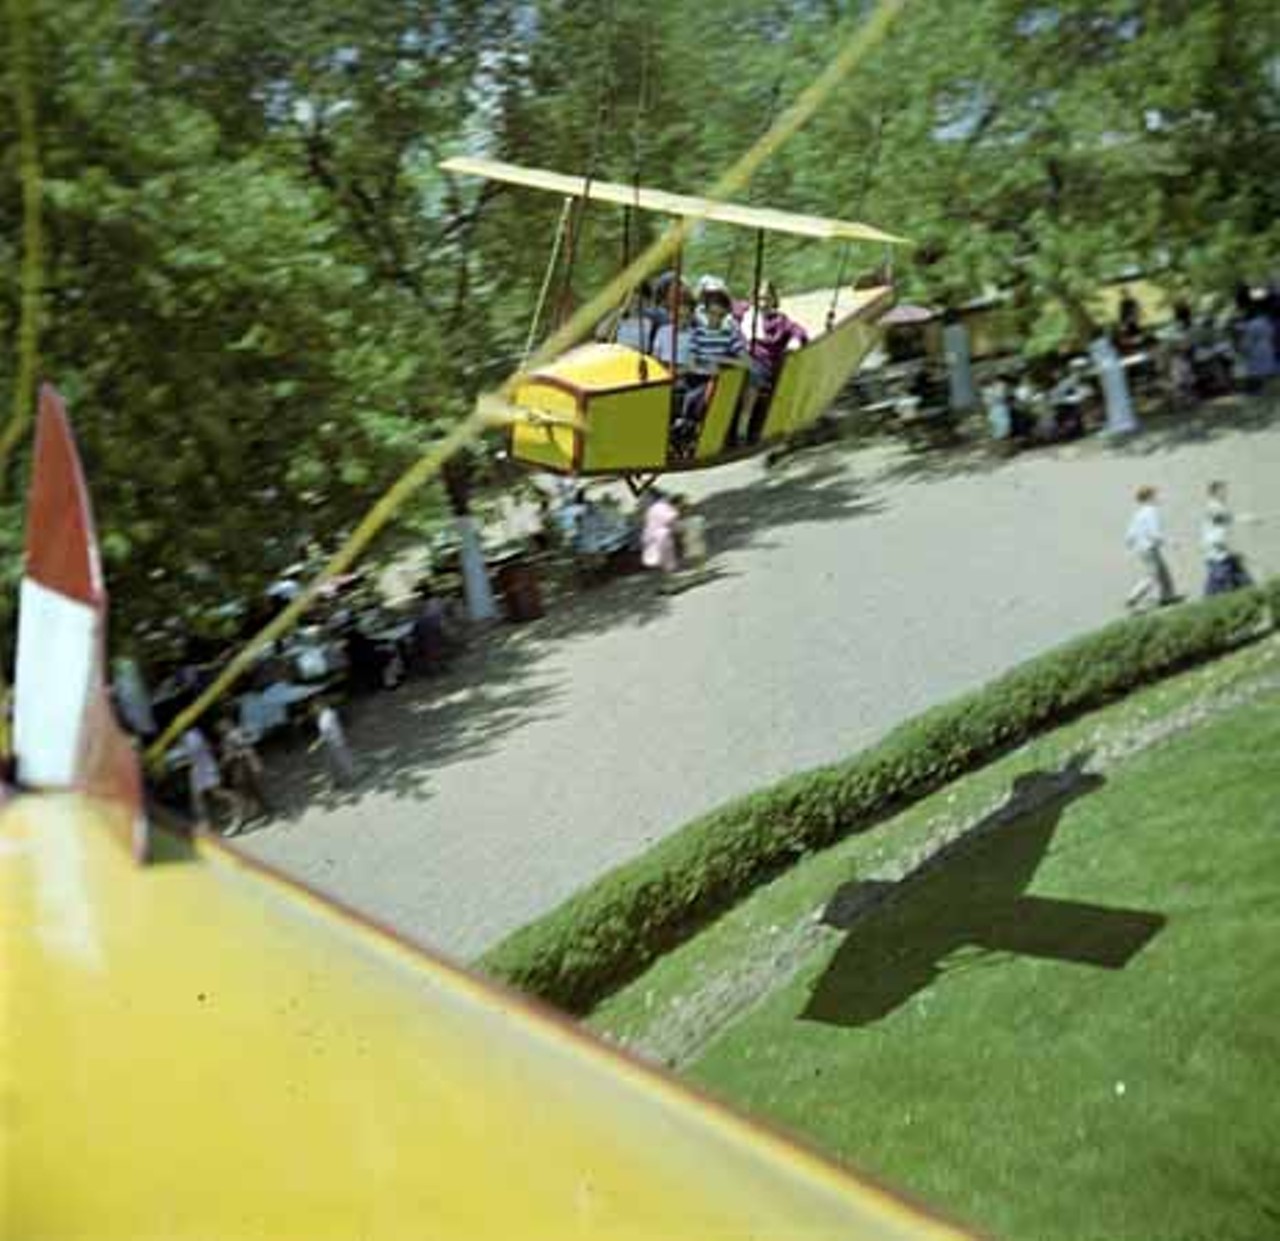 1947. Patrons take a spin on the bi-plane ride.